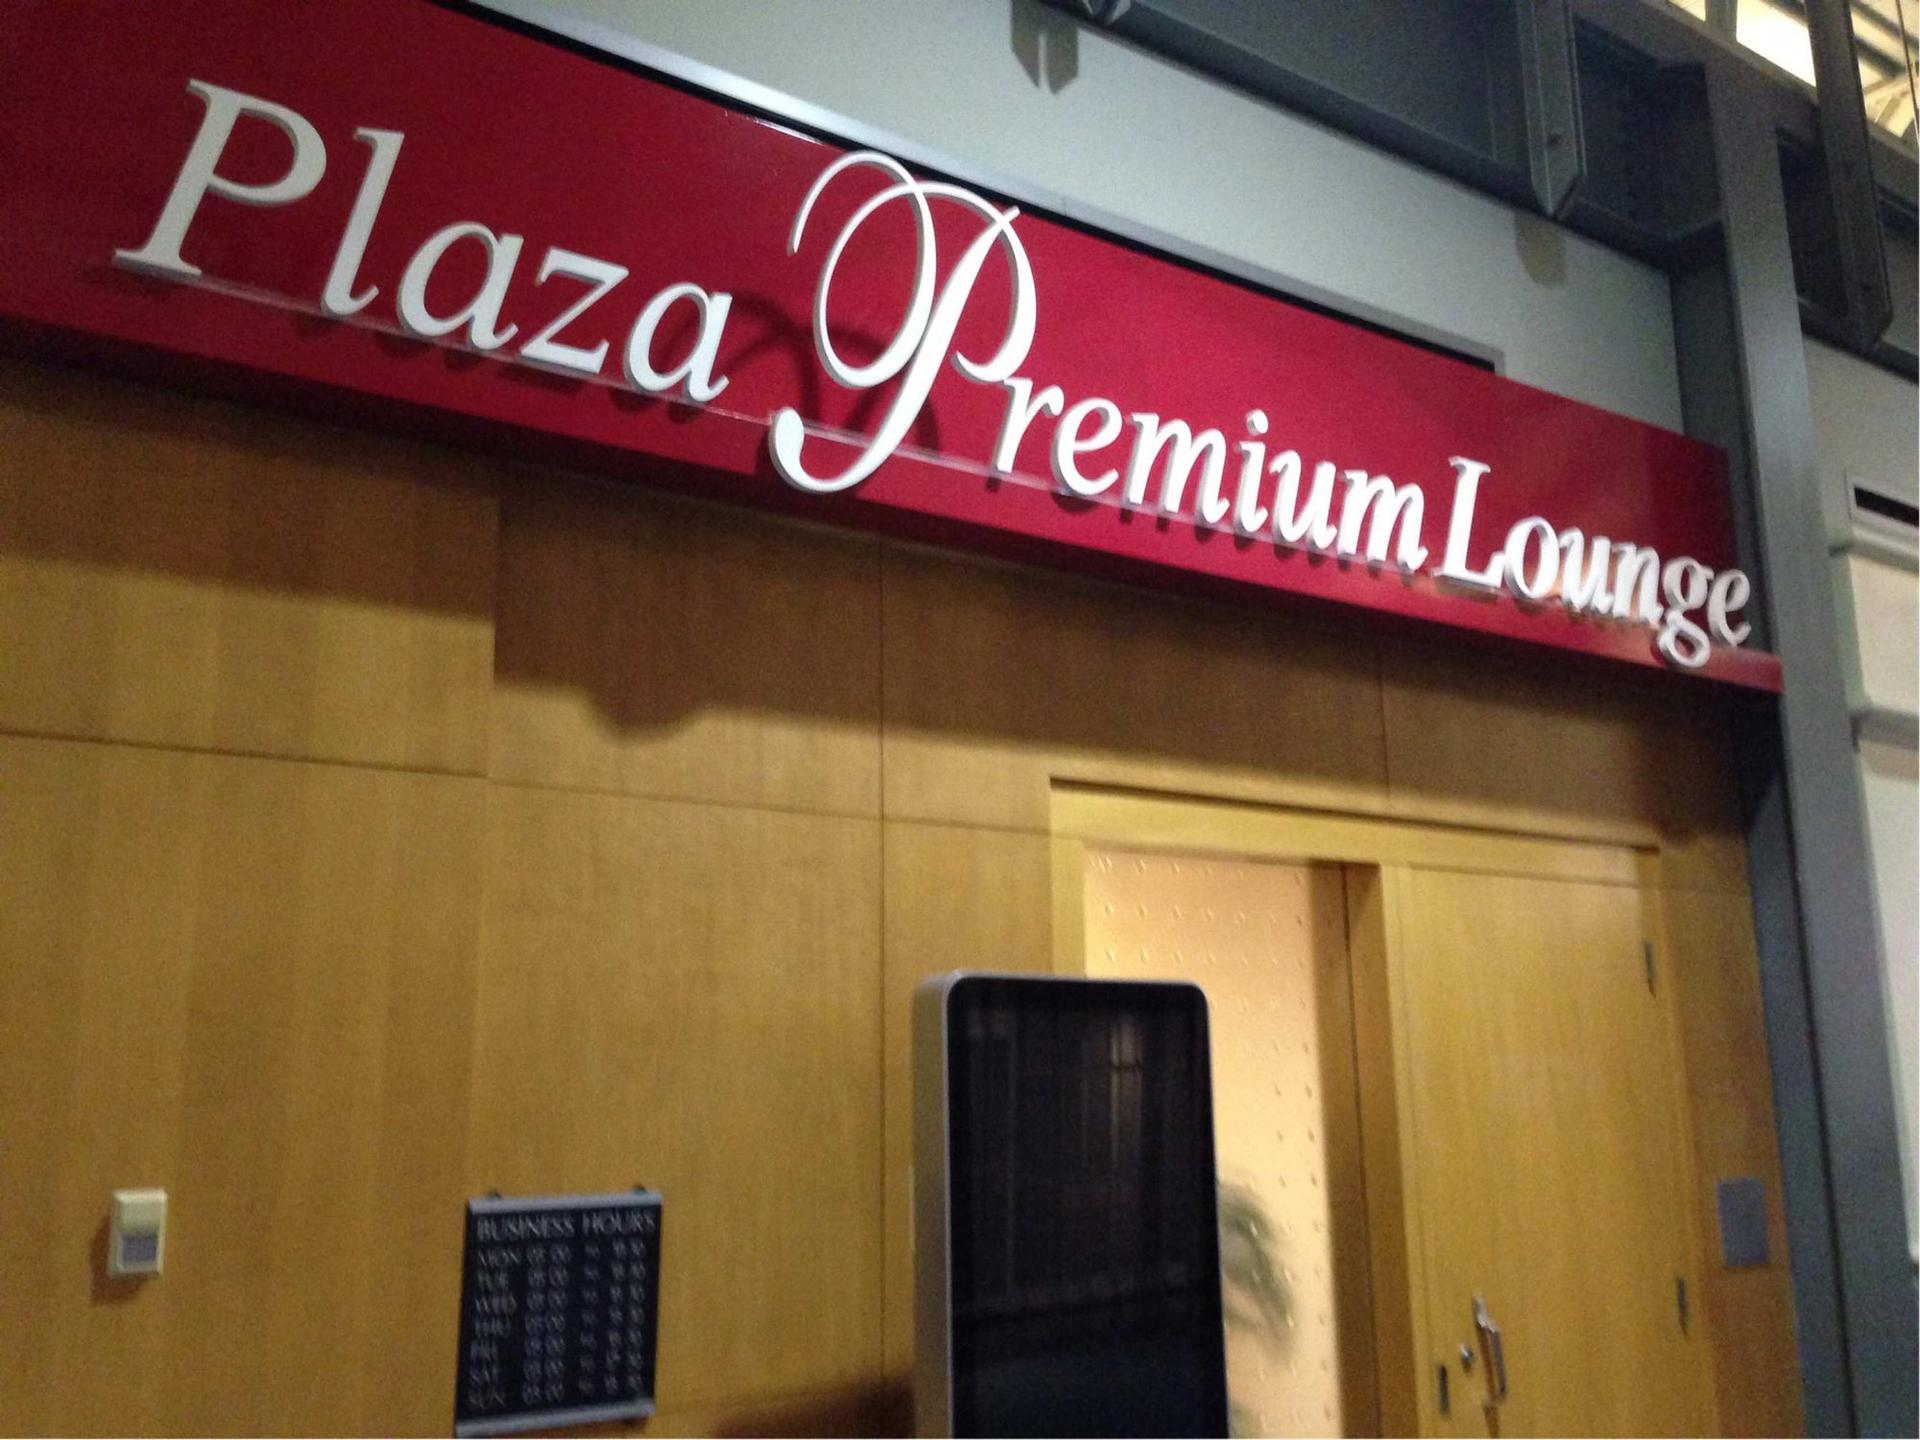 Plaza Premium Lounge image 18 of 57